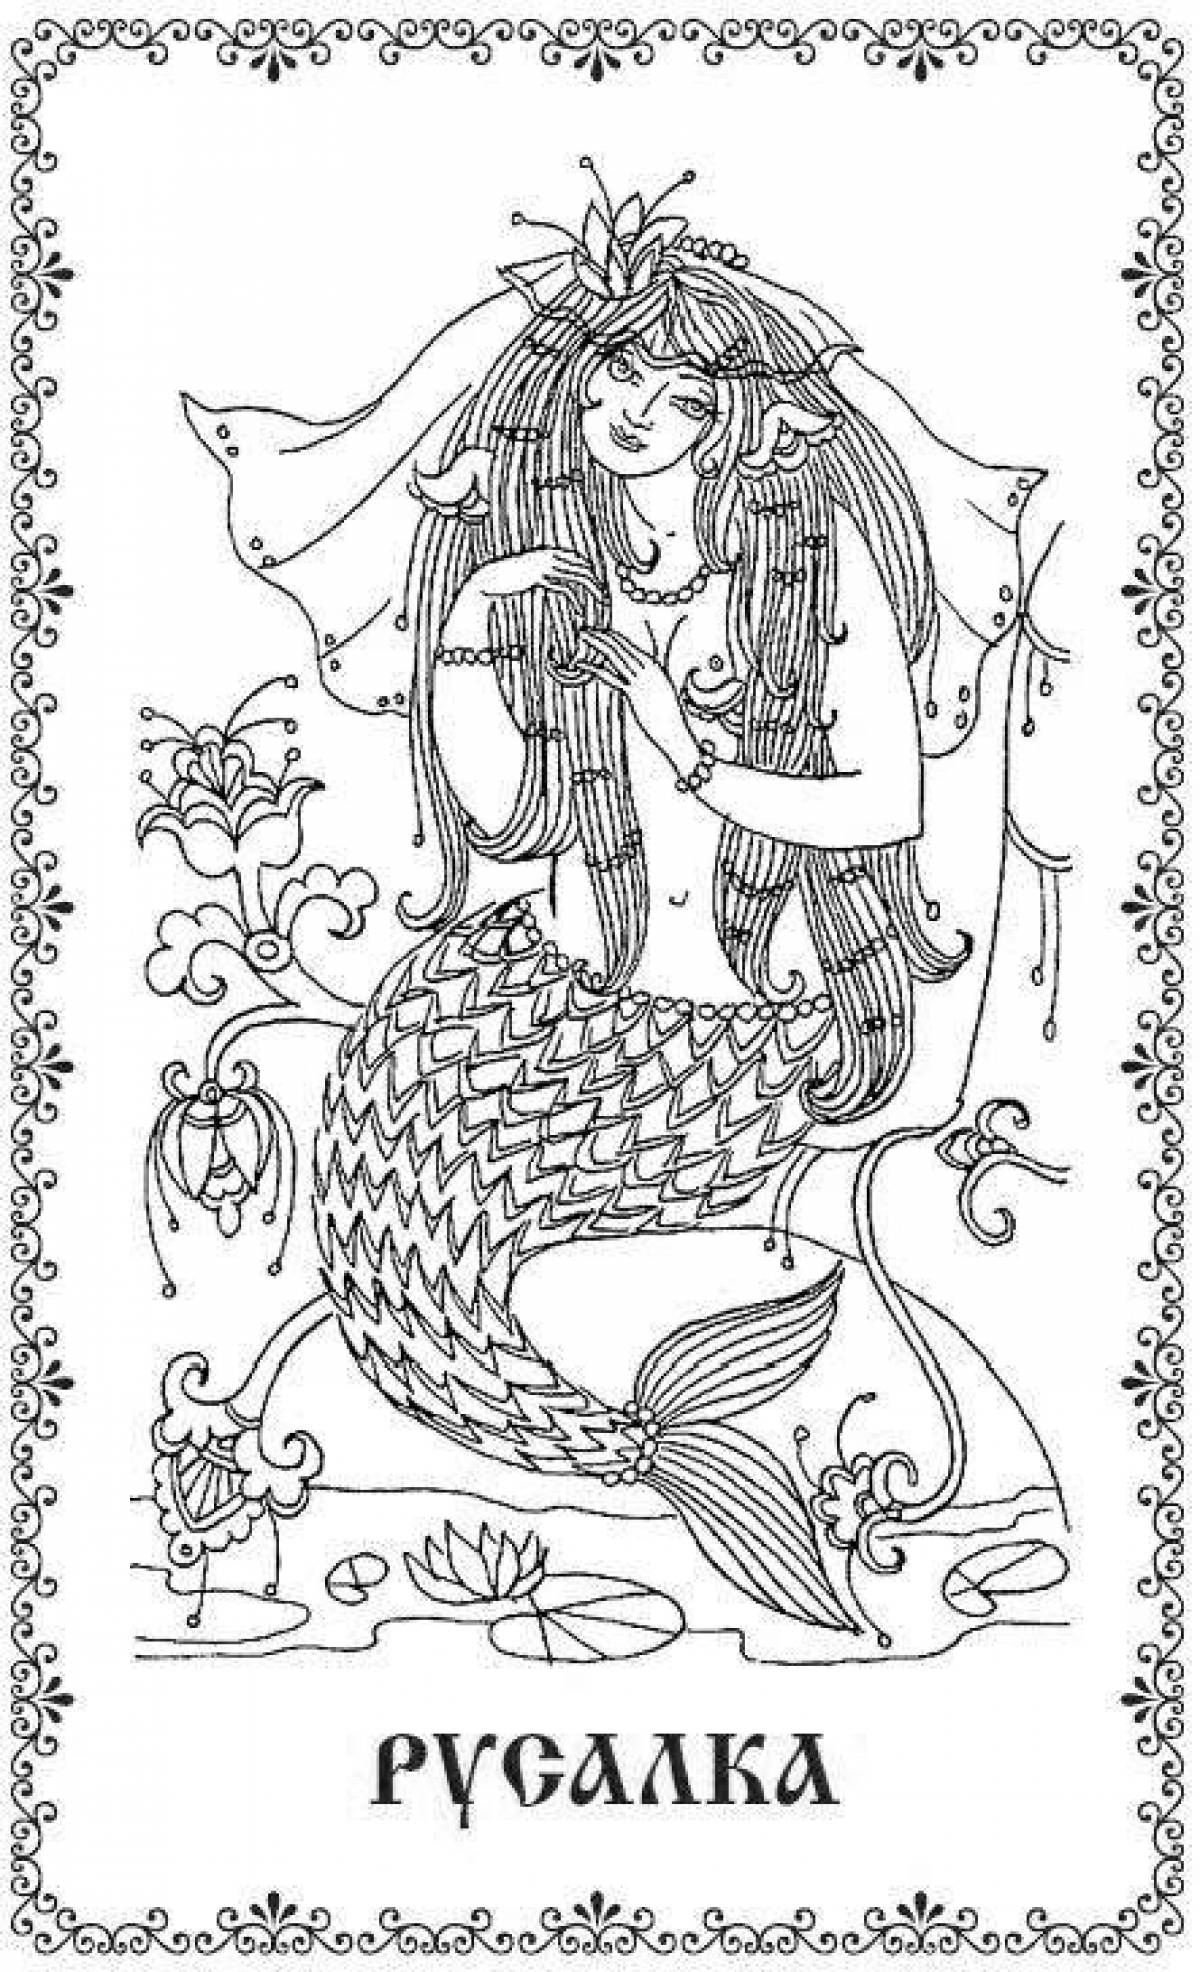 Alluring mermaids from Slavic myths